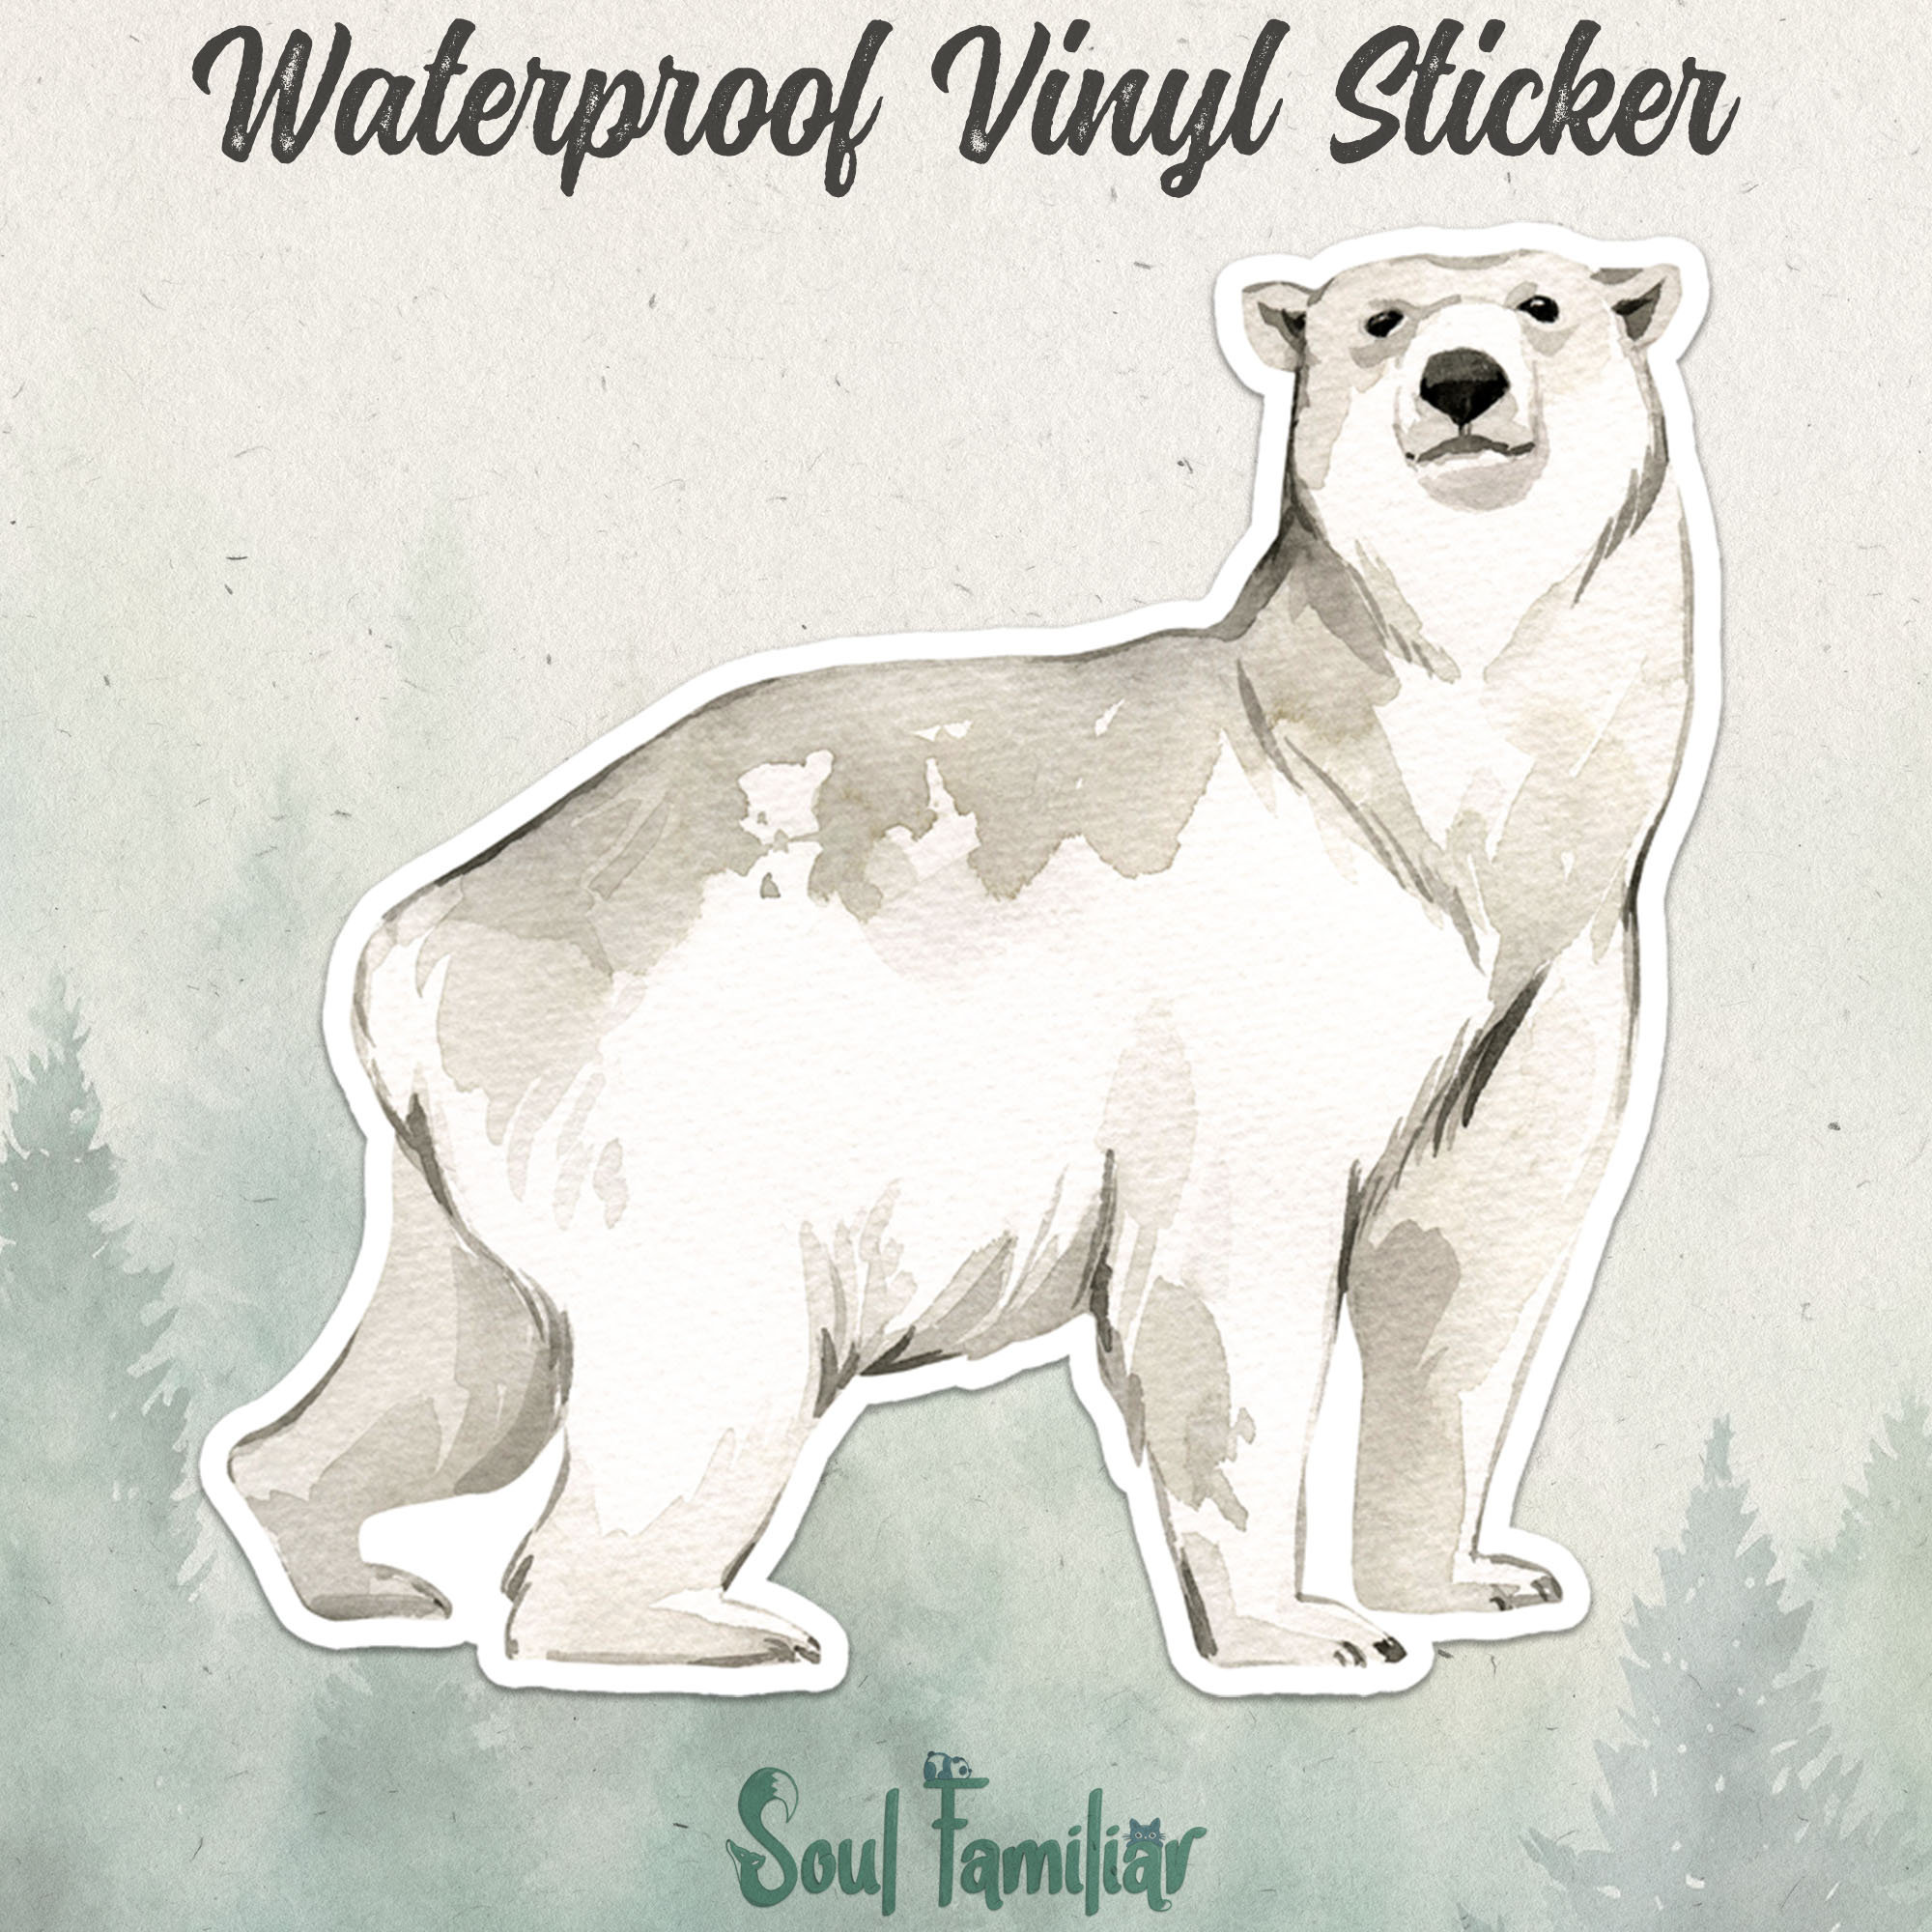 5,554 Polar Bear Stickers Images, Stock Photos, 3D objects, & Vectors